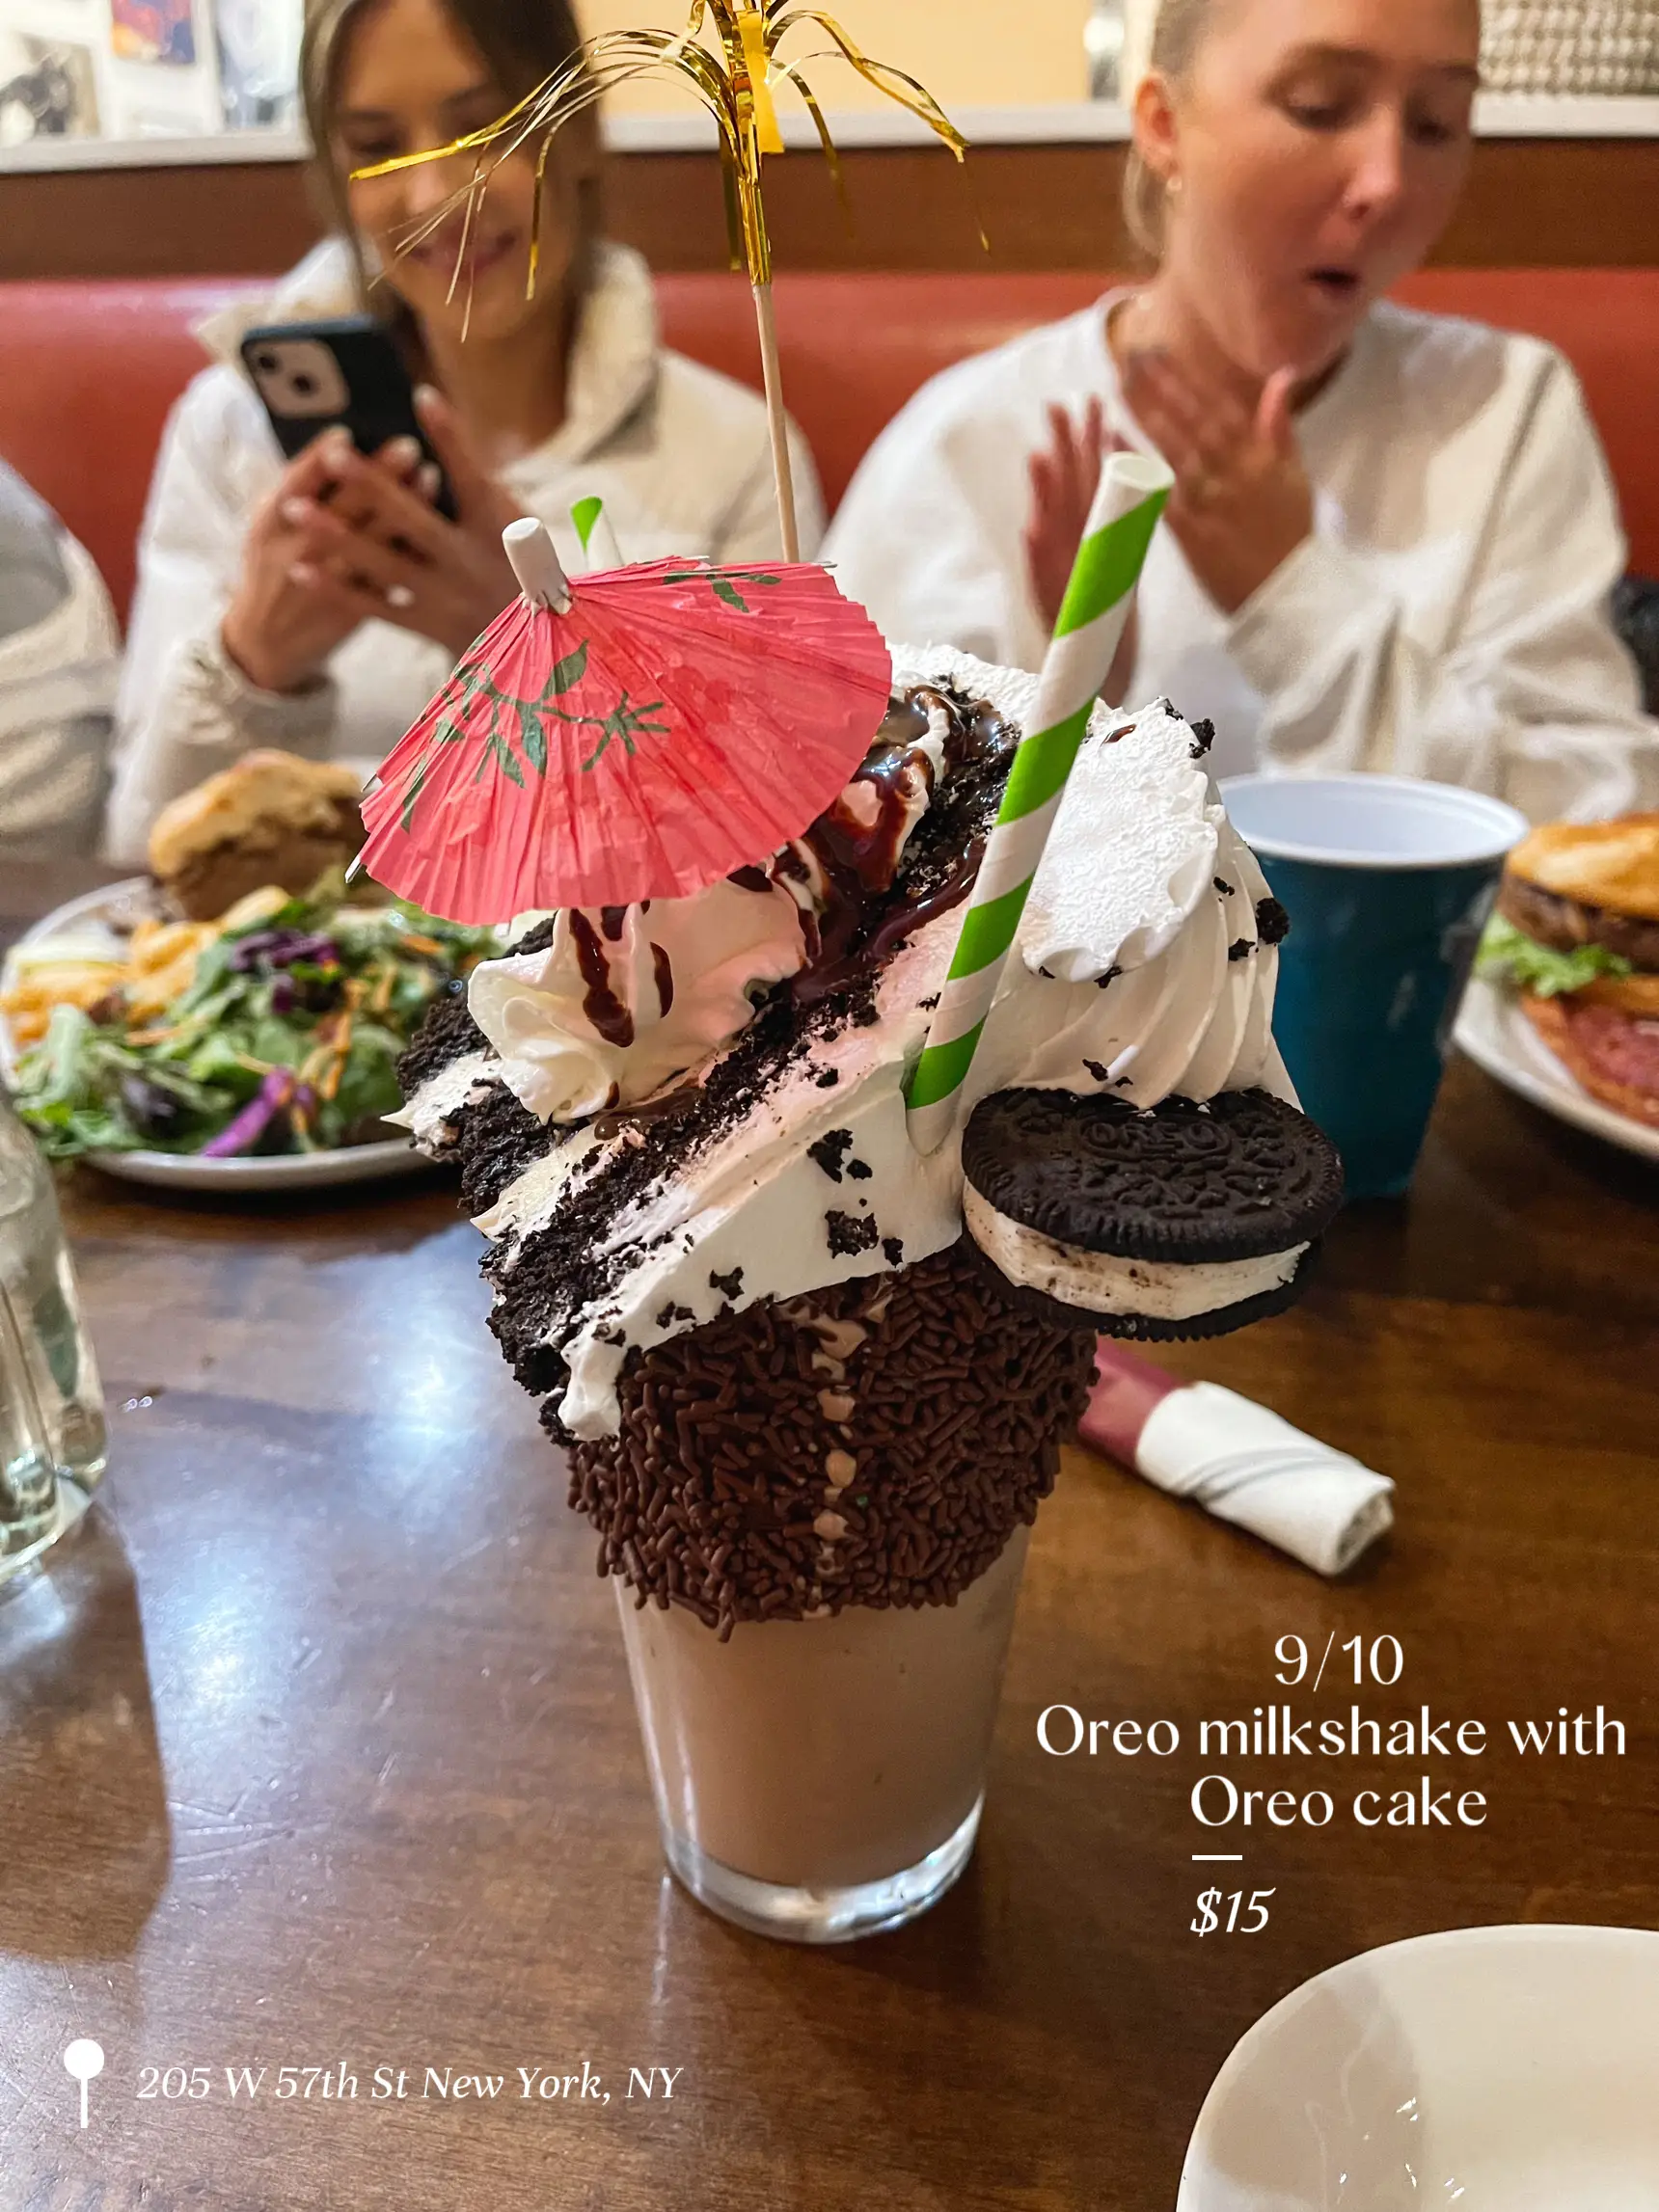  A glass of Oreo milkshake with a slice of Oreo cake on top.